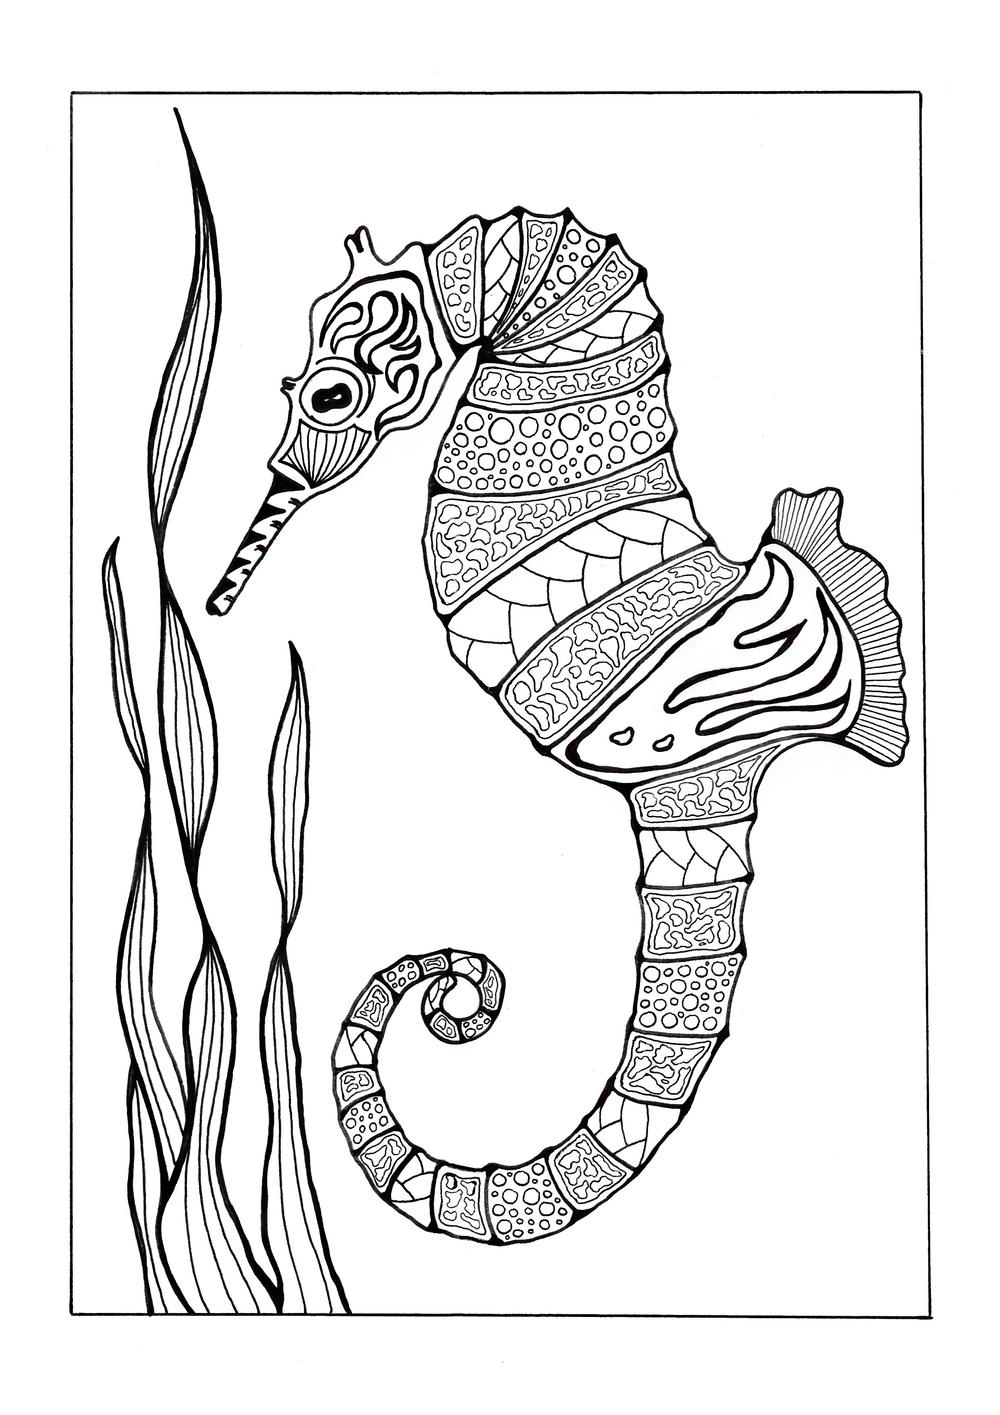 Download Colorful Seahorse Adult Coloring Page | FaveCrafts.com